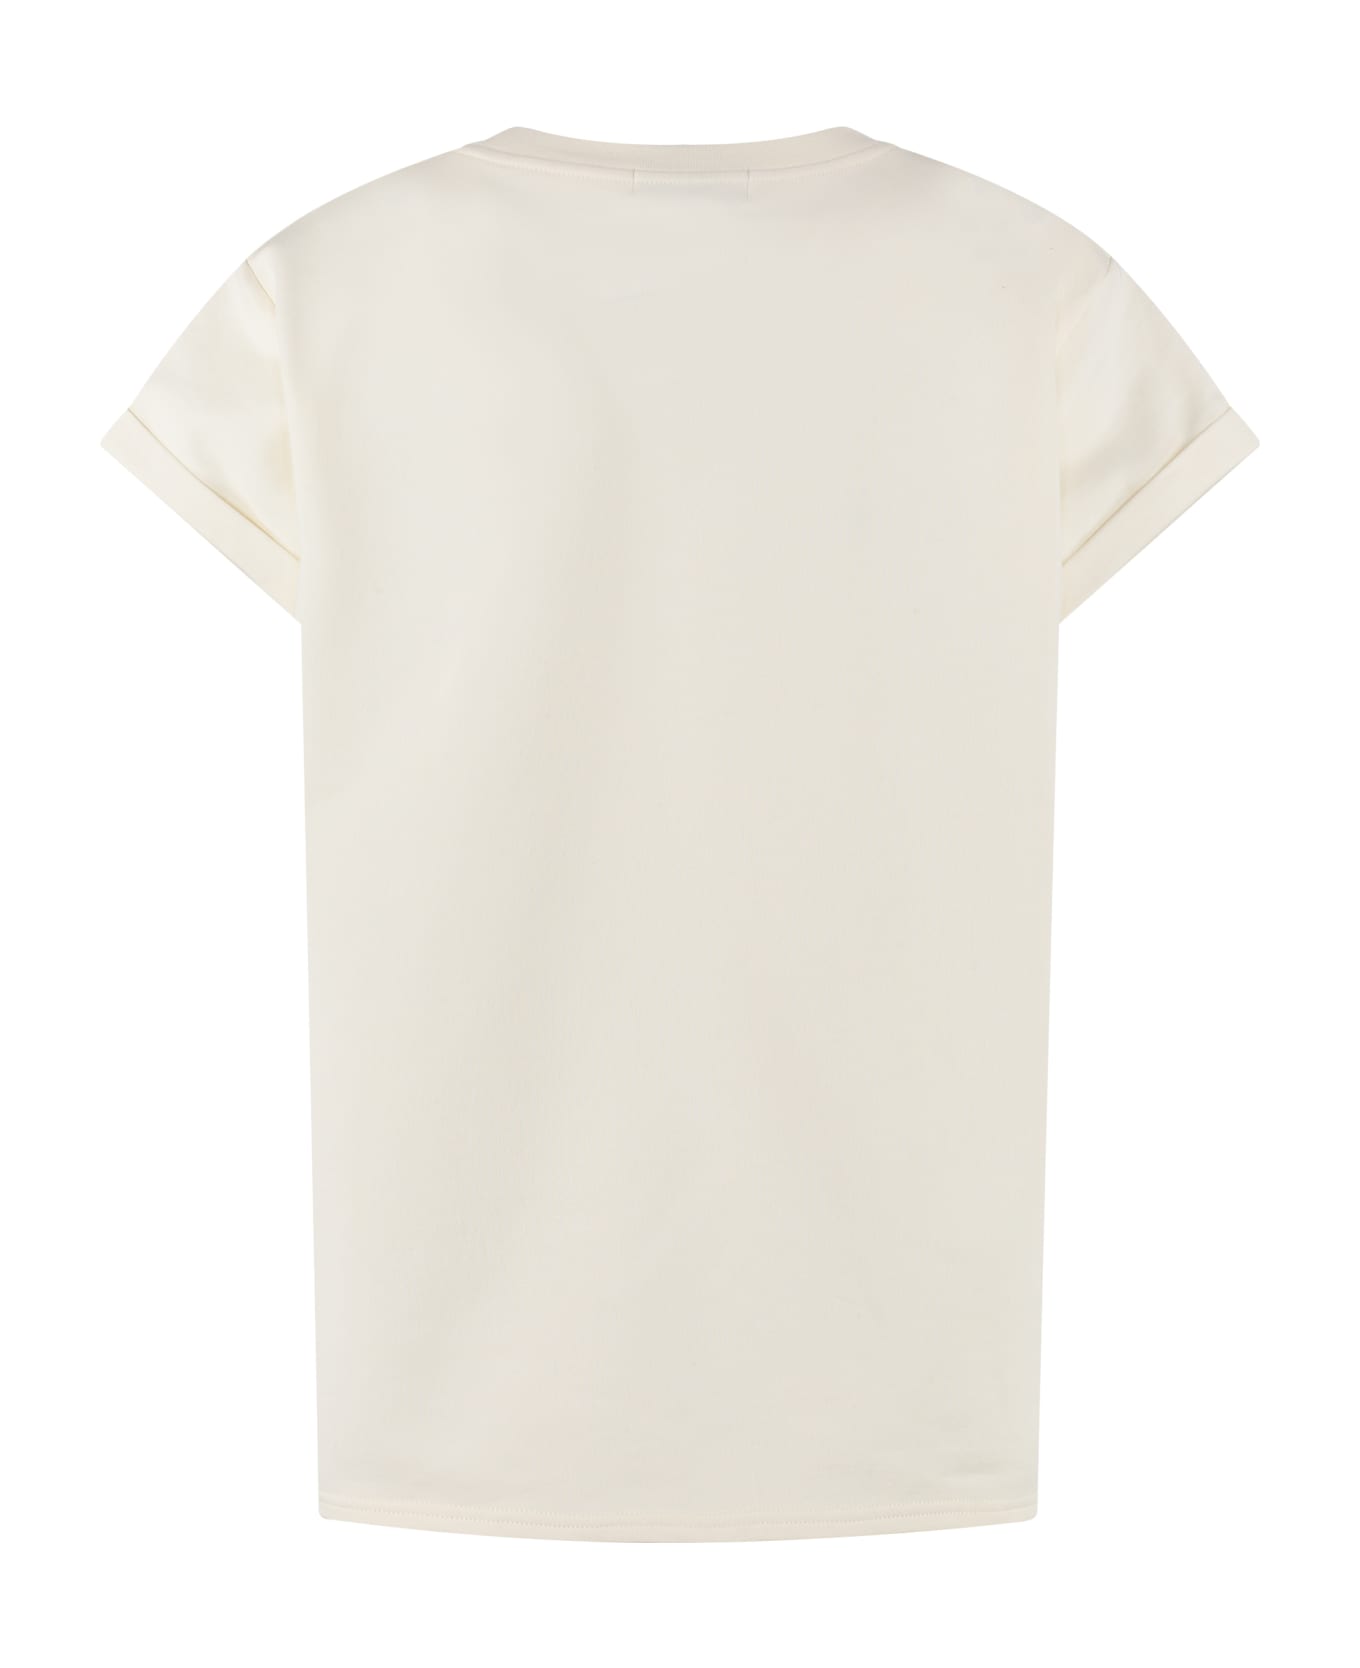 Rodebjer Nora Cotton T-shirt - panna Tシャツ